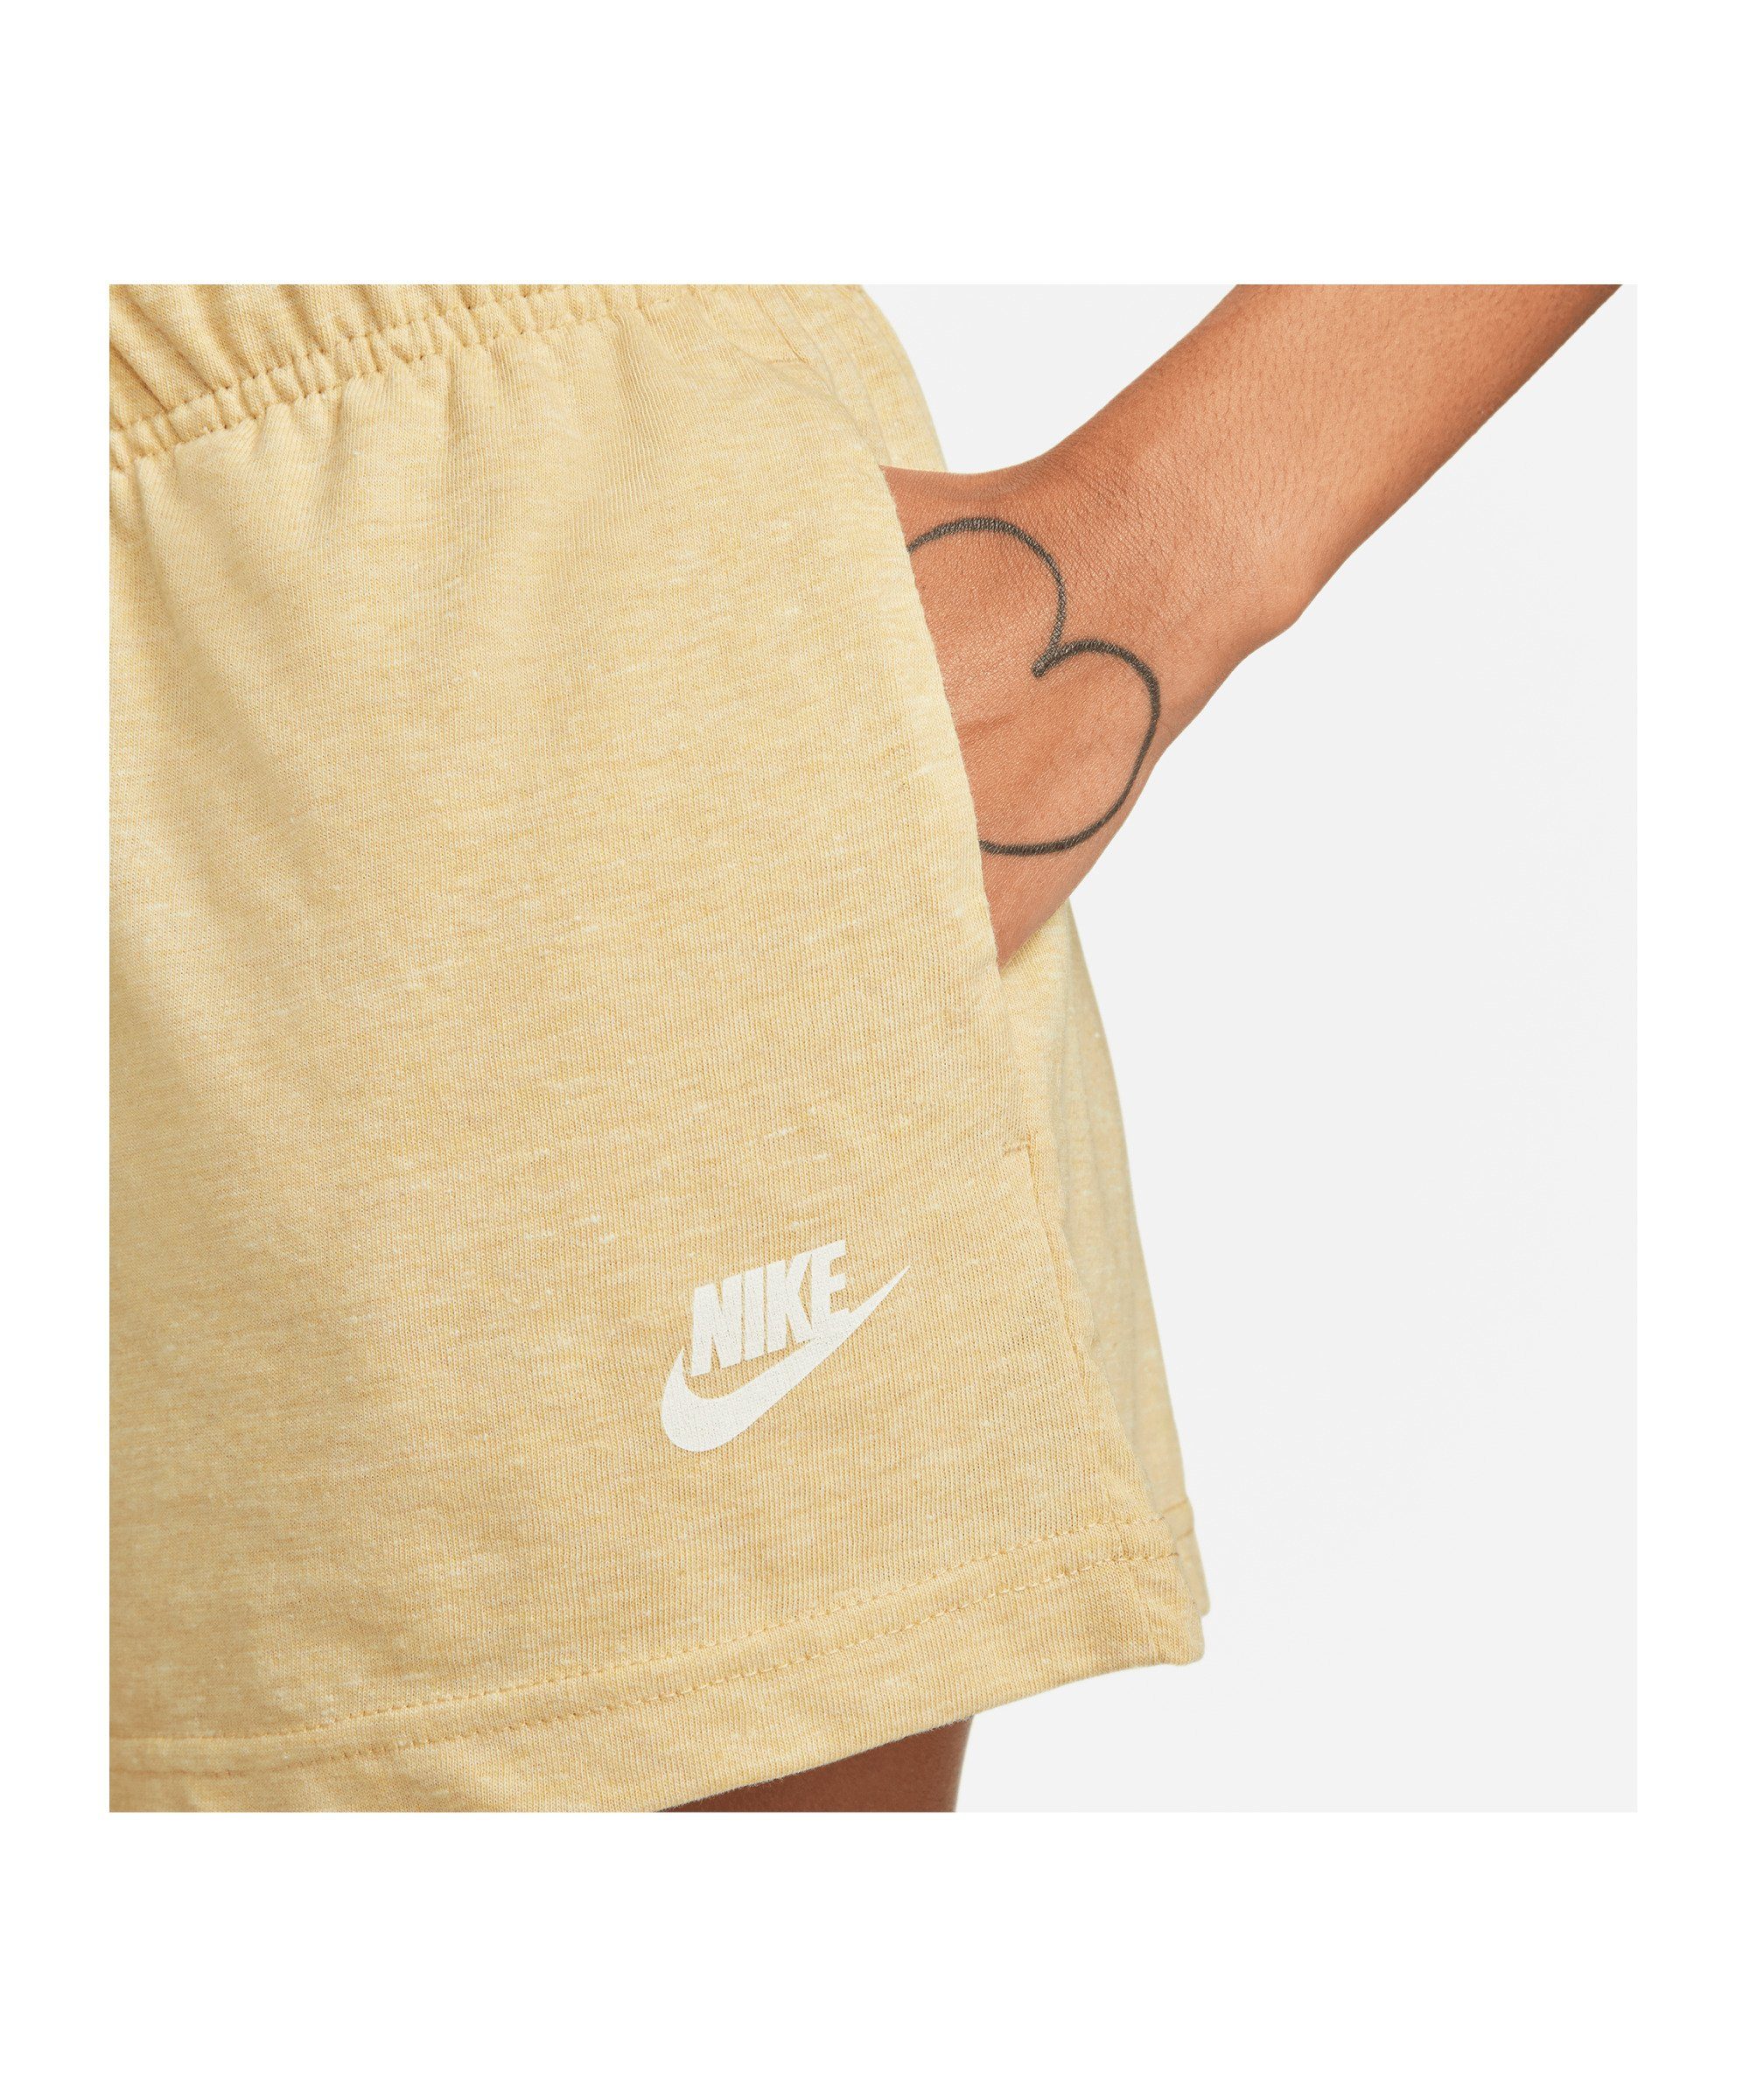 Nike Sportswear Jogginghose Vintage Damen Gym Short braunweiss